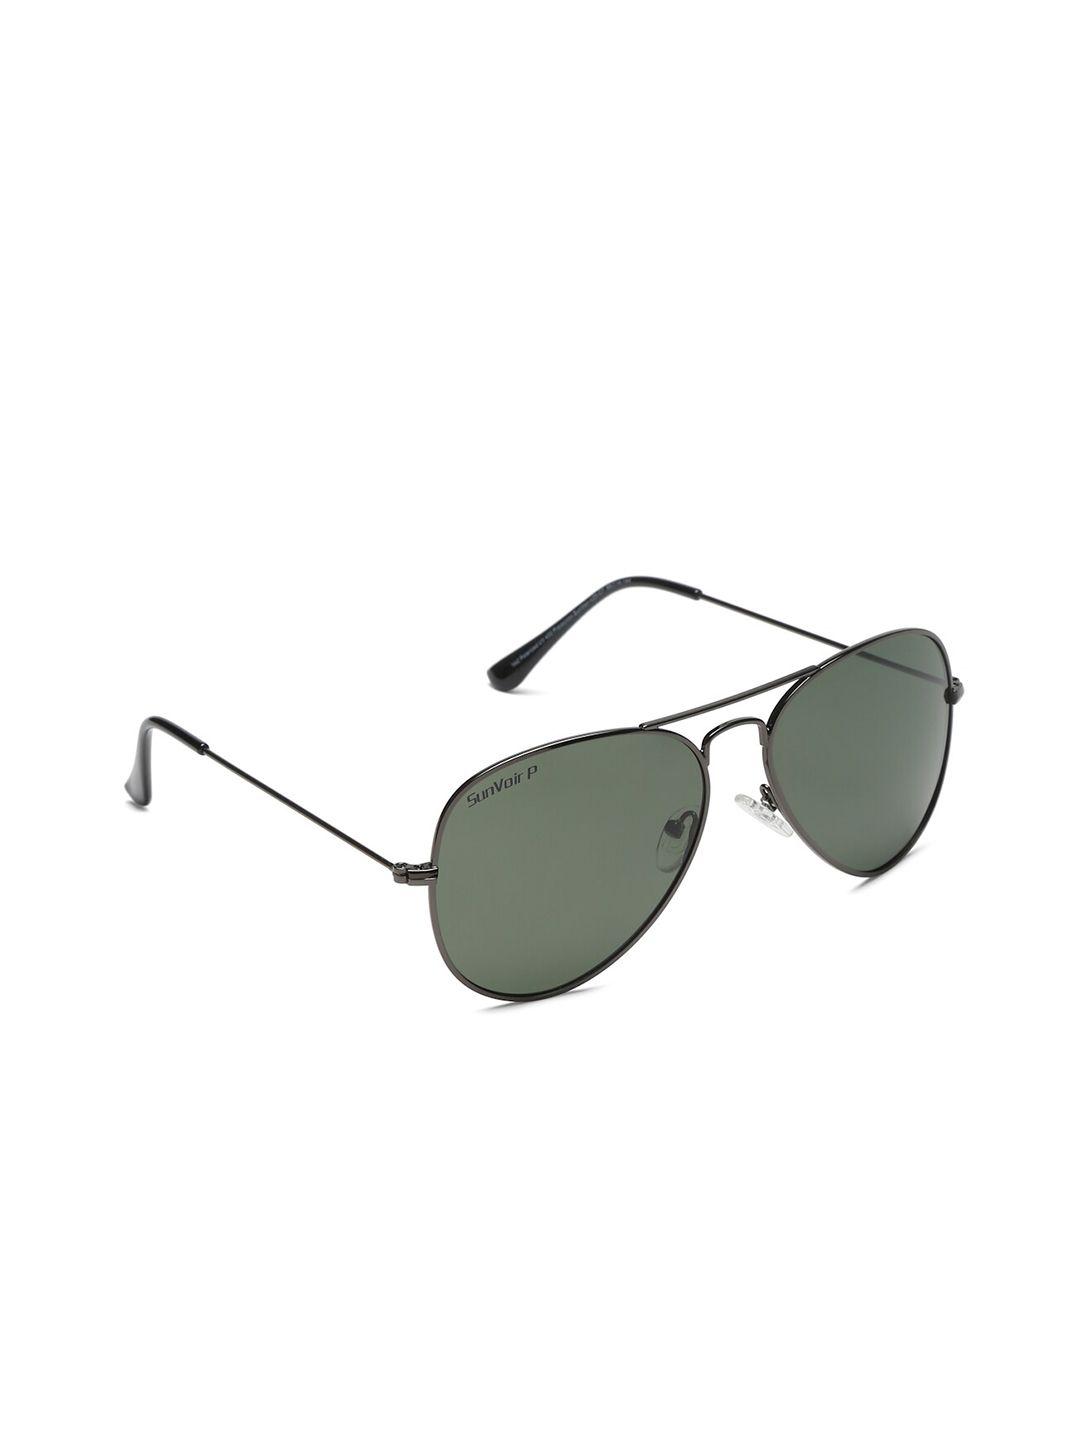 sunnies aviator sunglasses with polarised lens